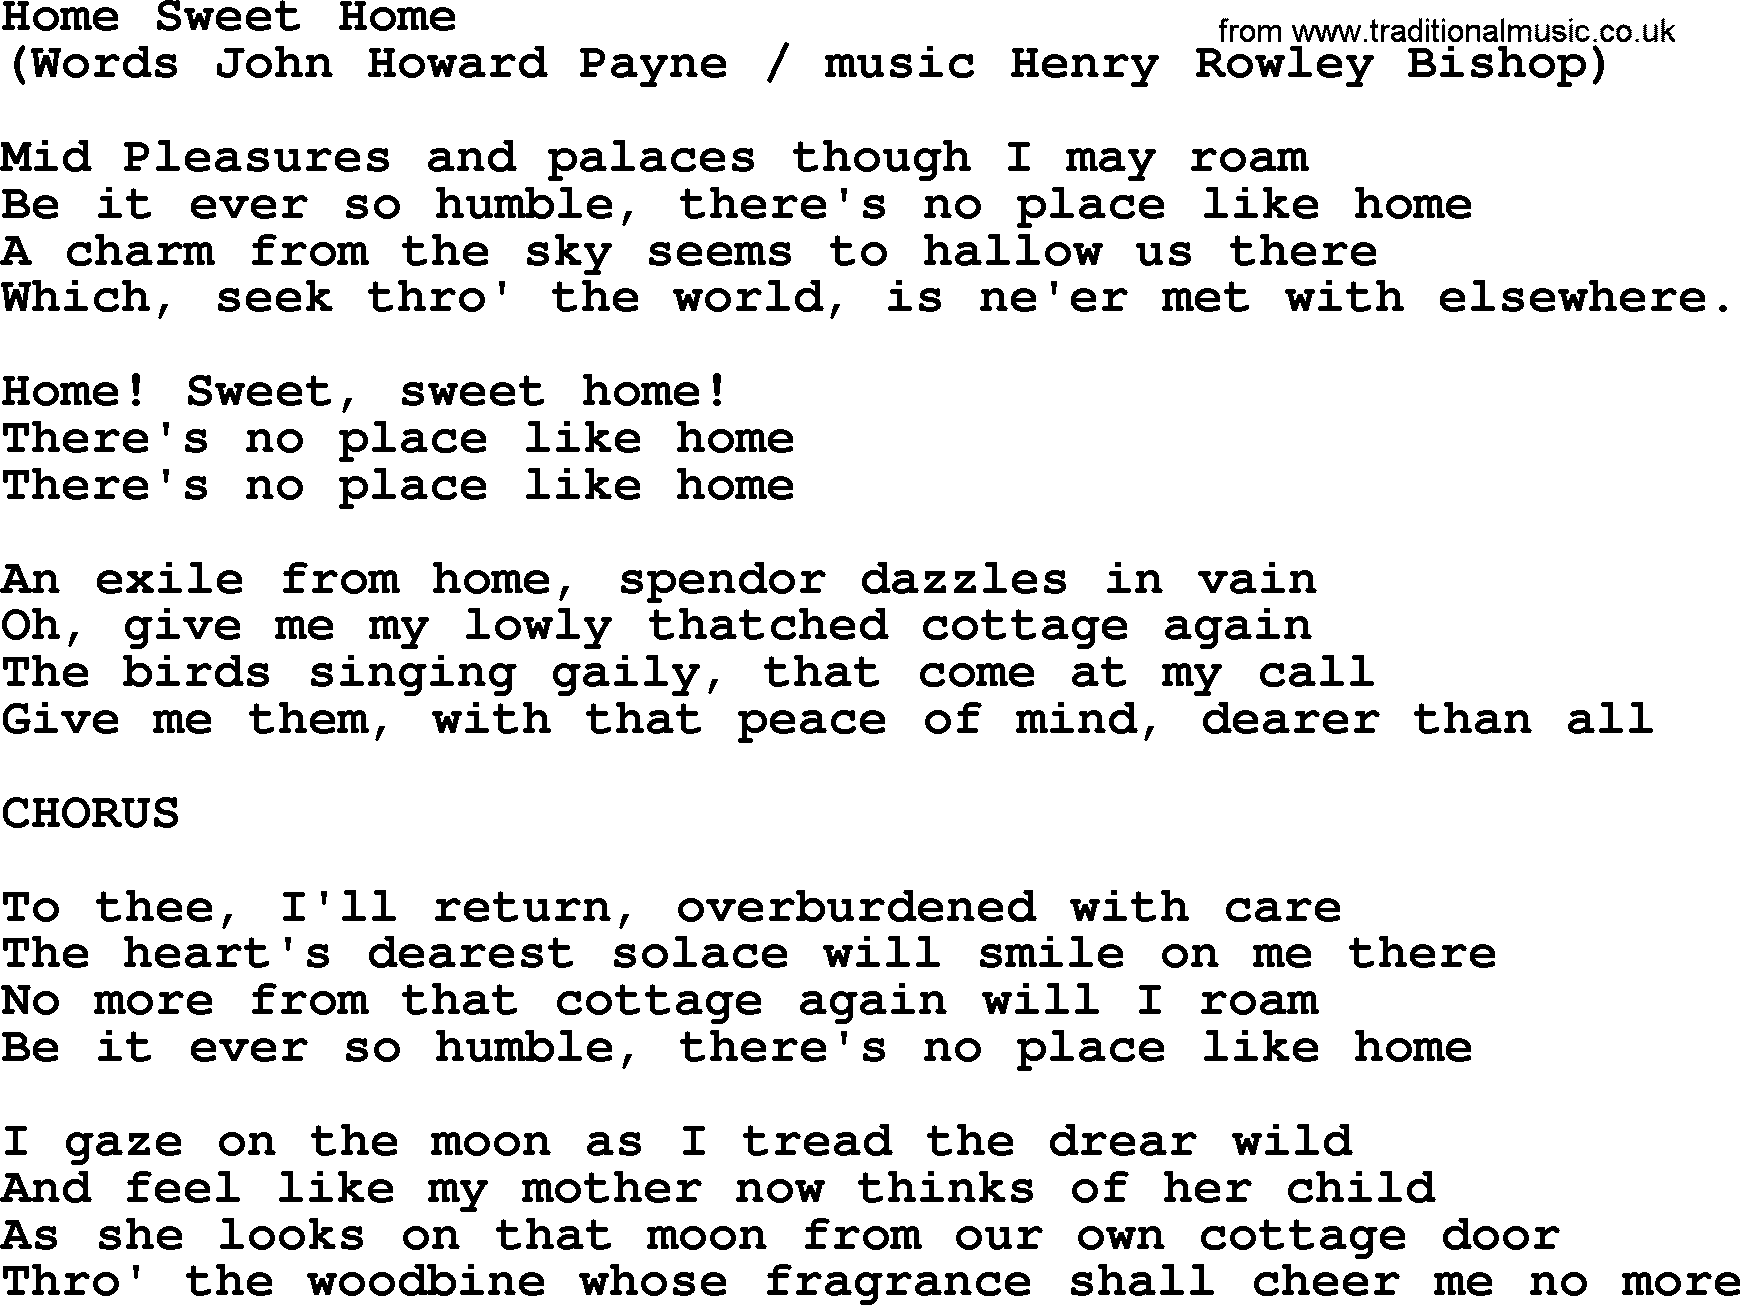 The Byrds song Home Sweet Home, lyrics